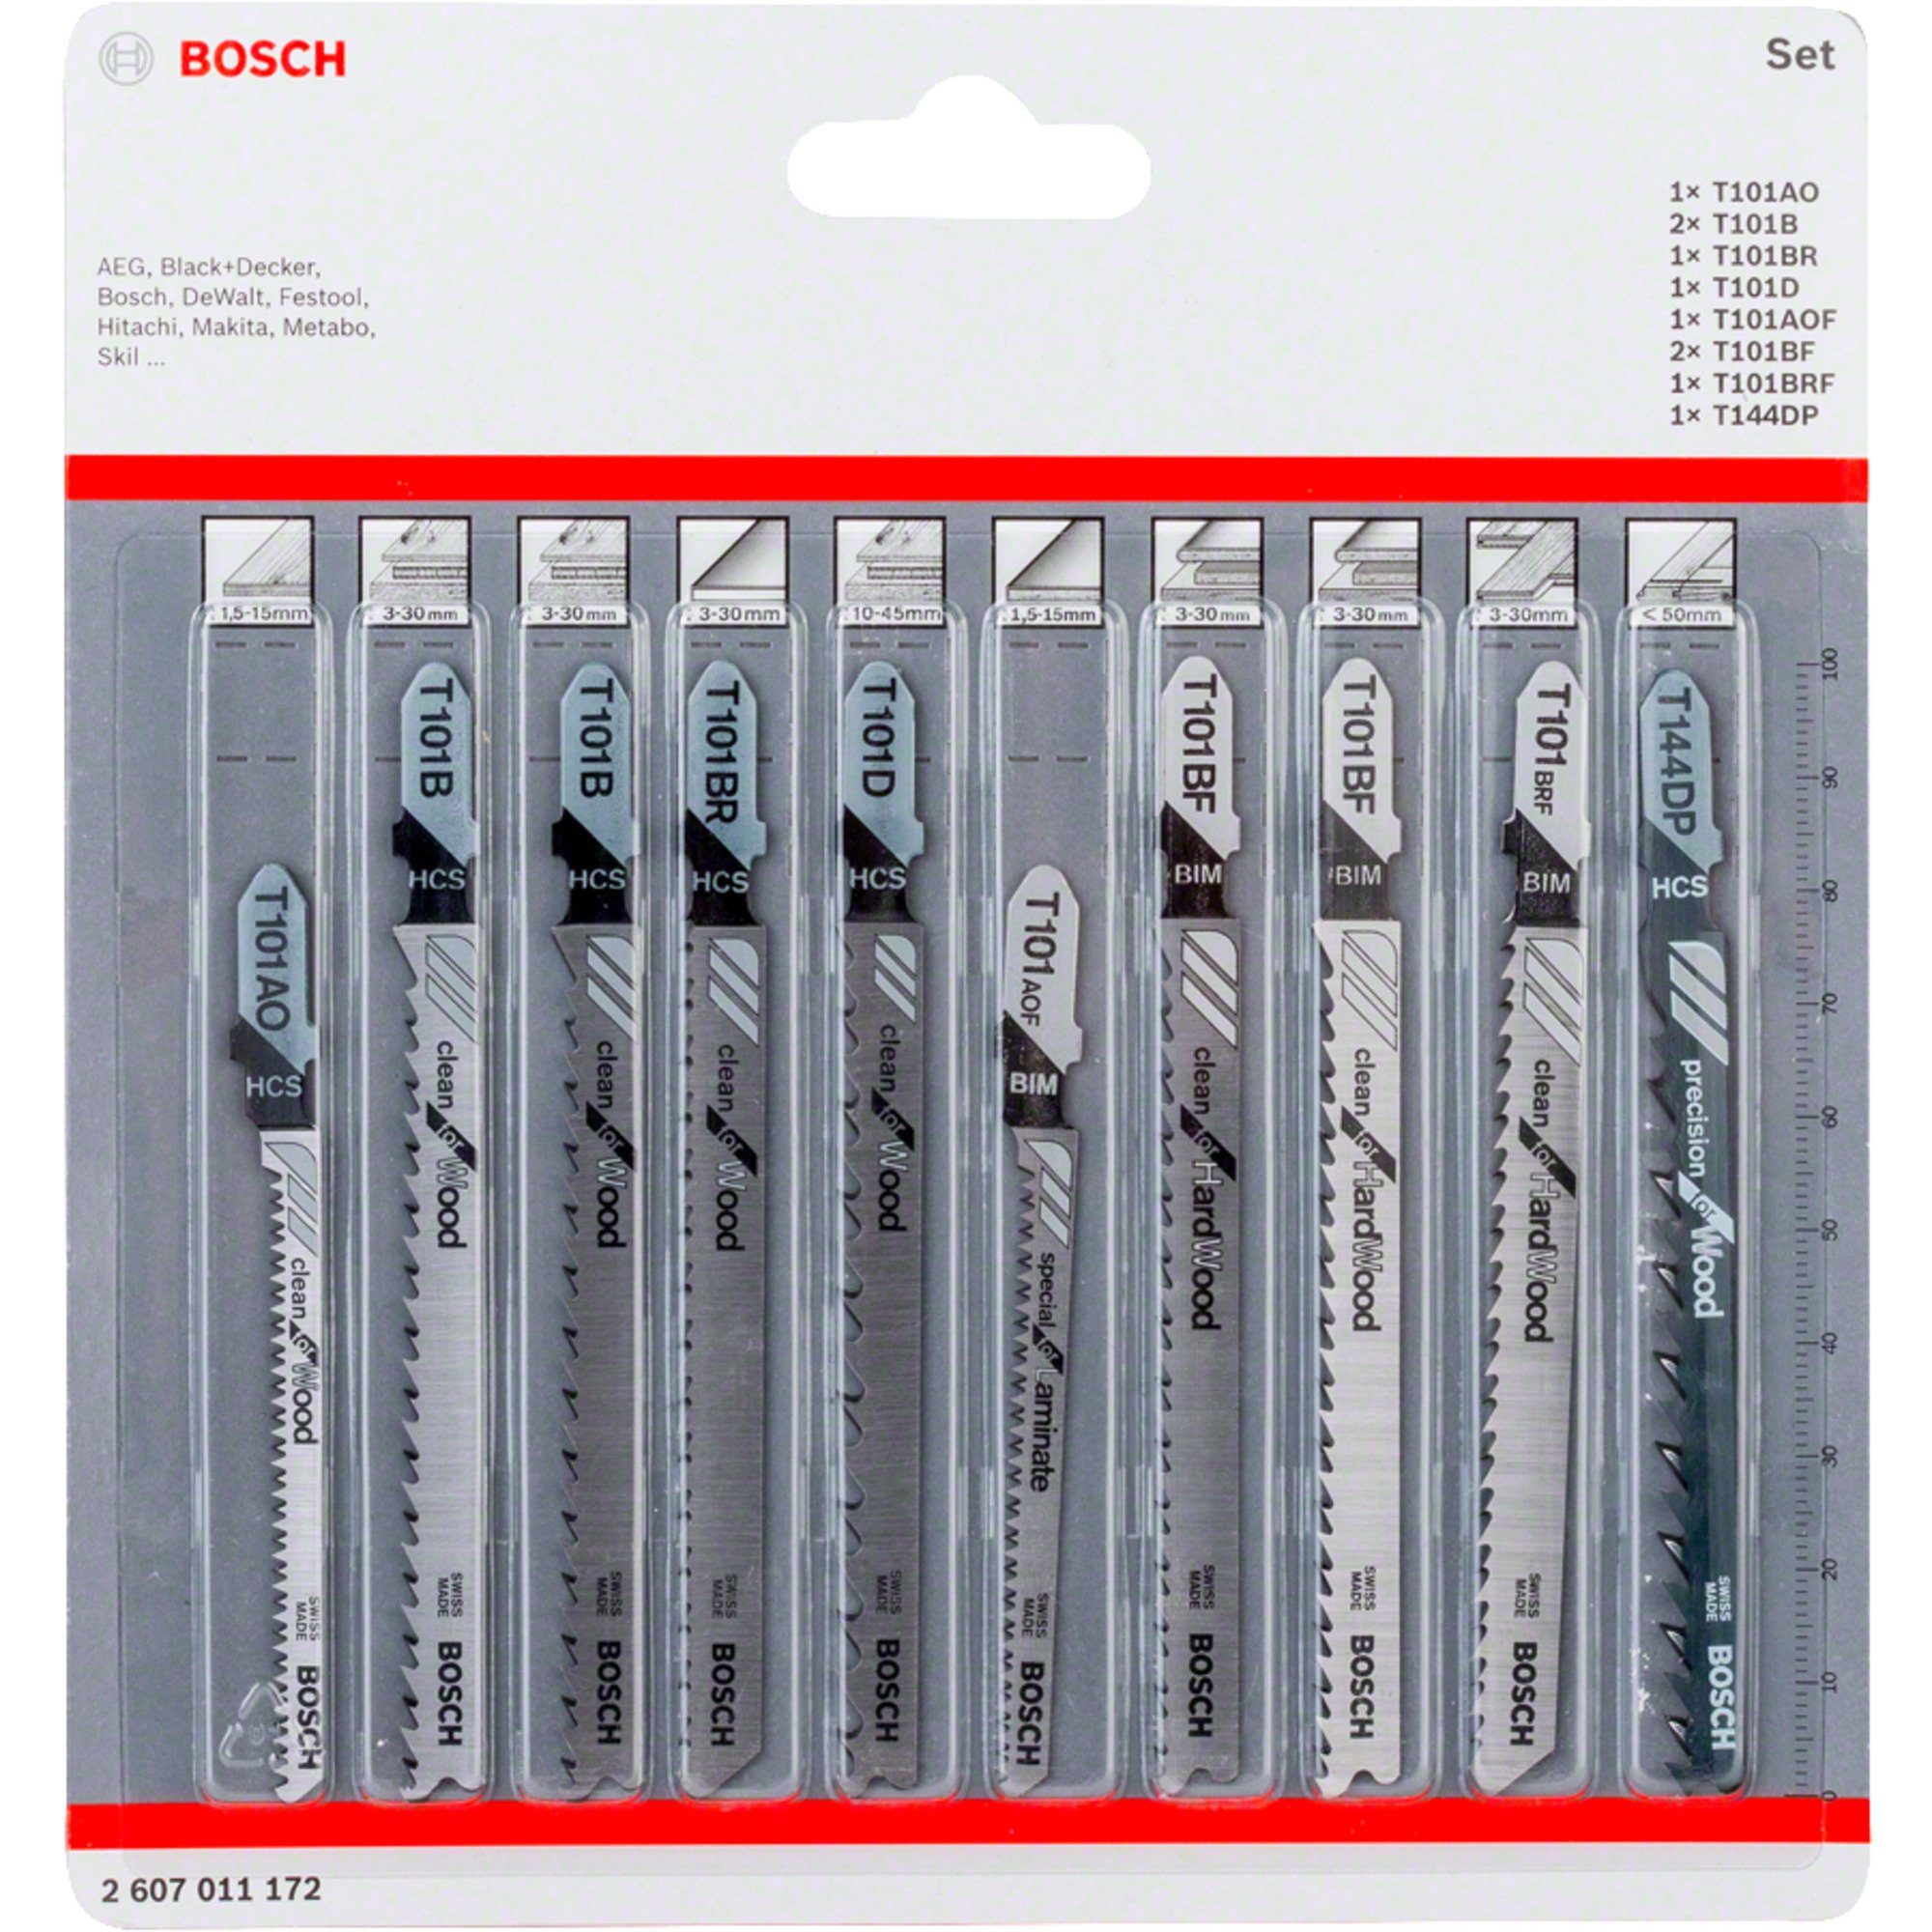 BOSCH Sägeblatt Bosch Professional Stichsägeblatt-Satz Clean | Stichsägeblätter